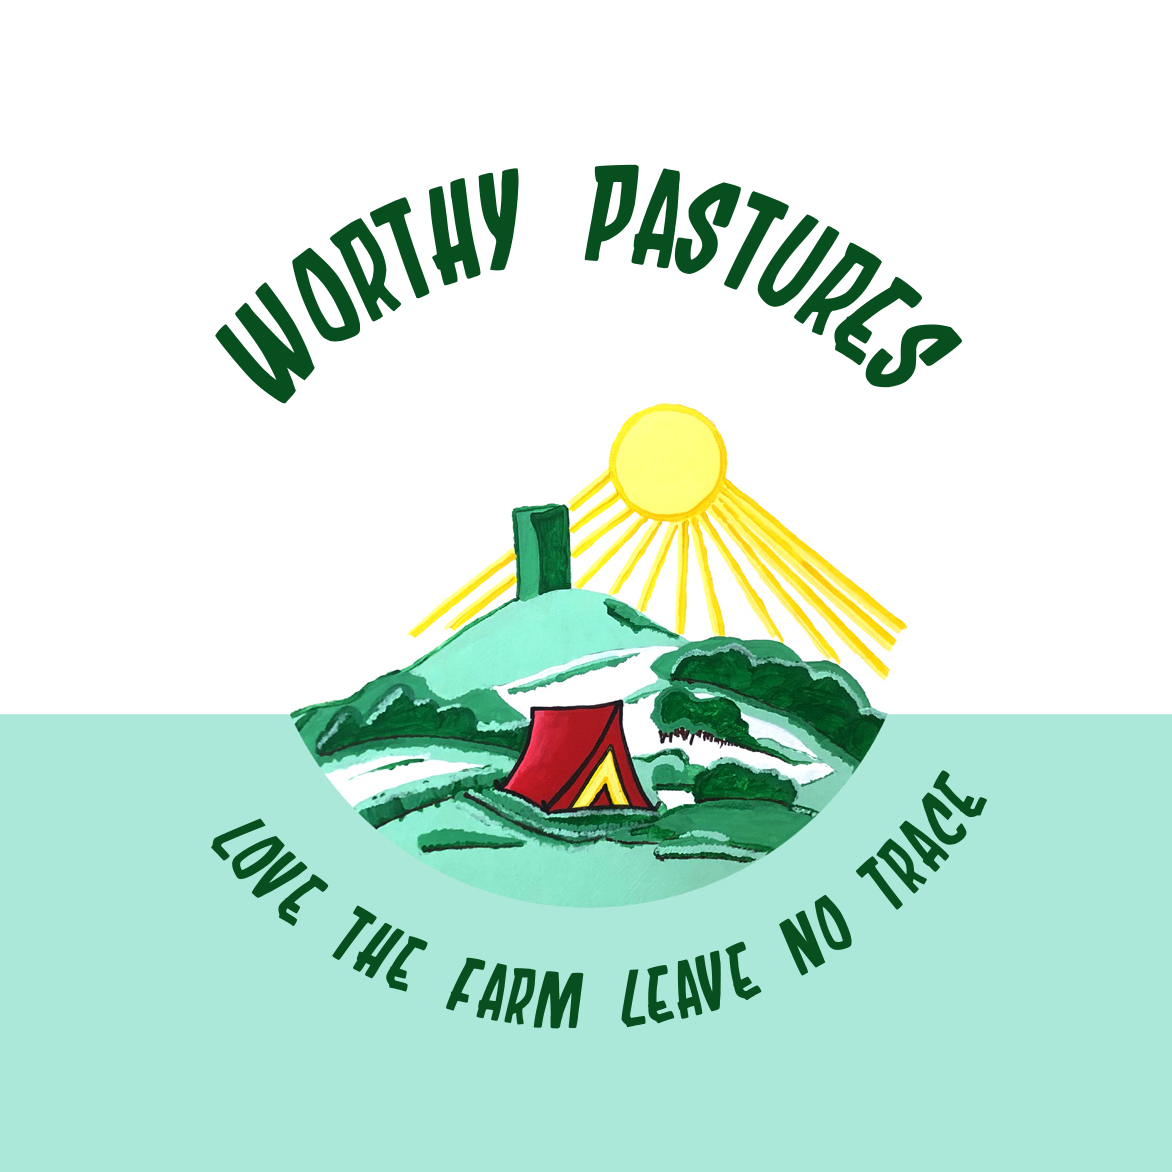 Worthy Pastures